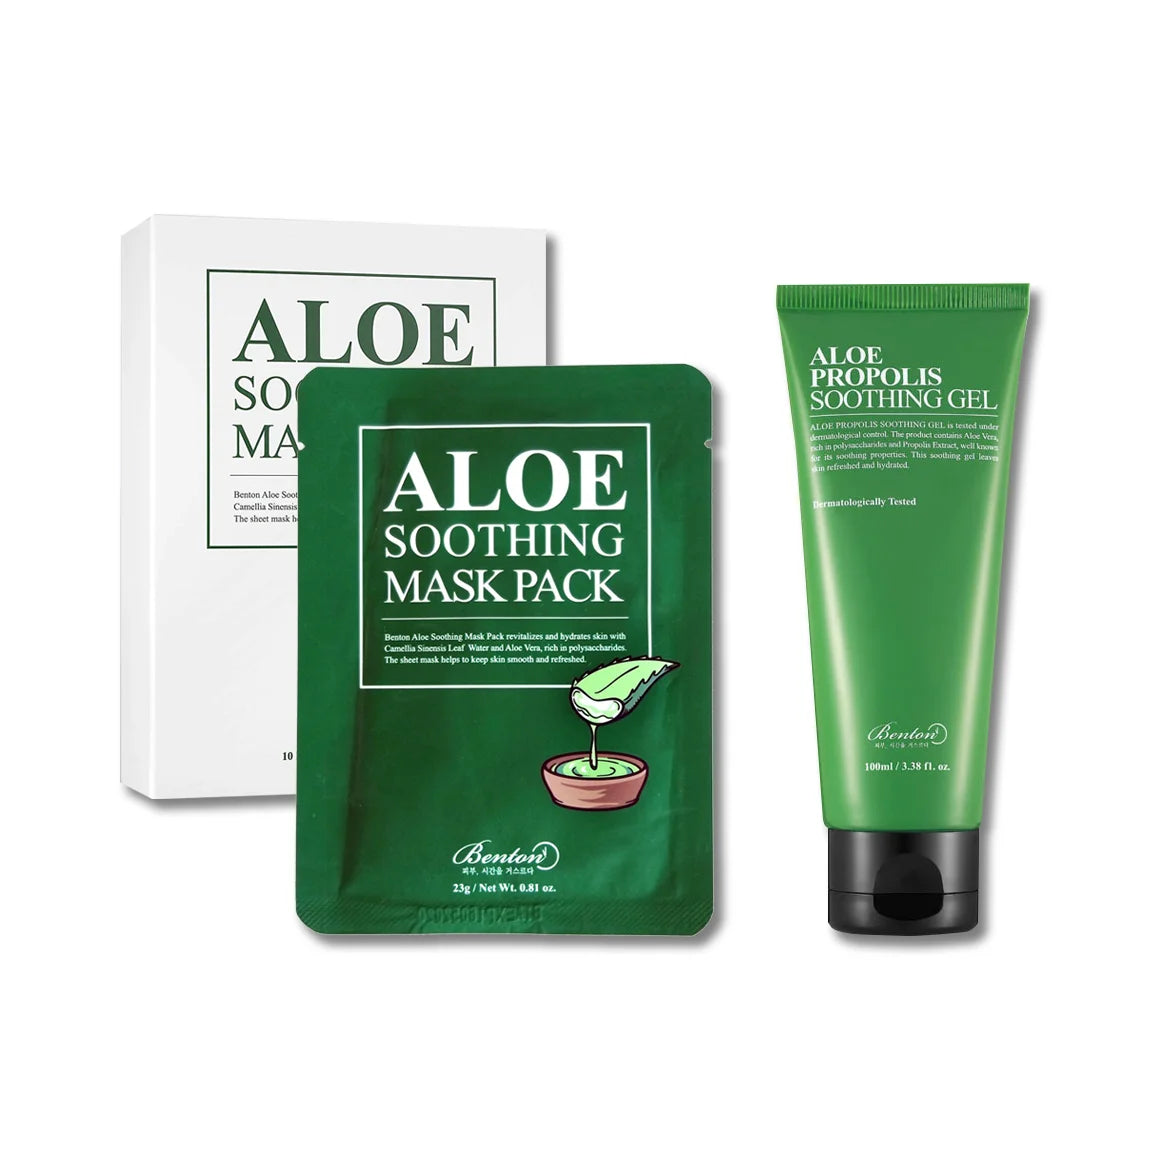 Benton Aloe Soothing Set  best South Korean Skin Care soothing gel sheet mask for dry redden sunburnt skin after sun burn natural healing cosmetics K Beauty World